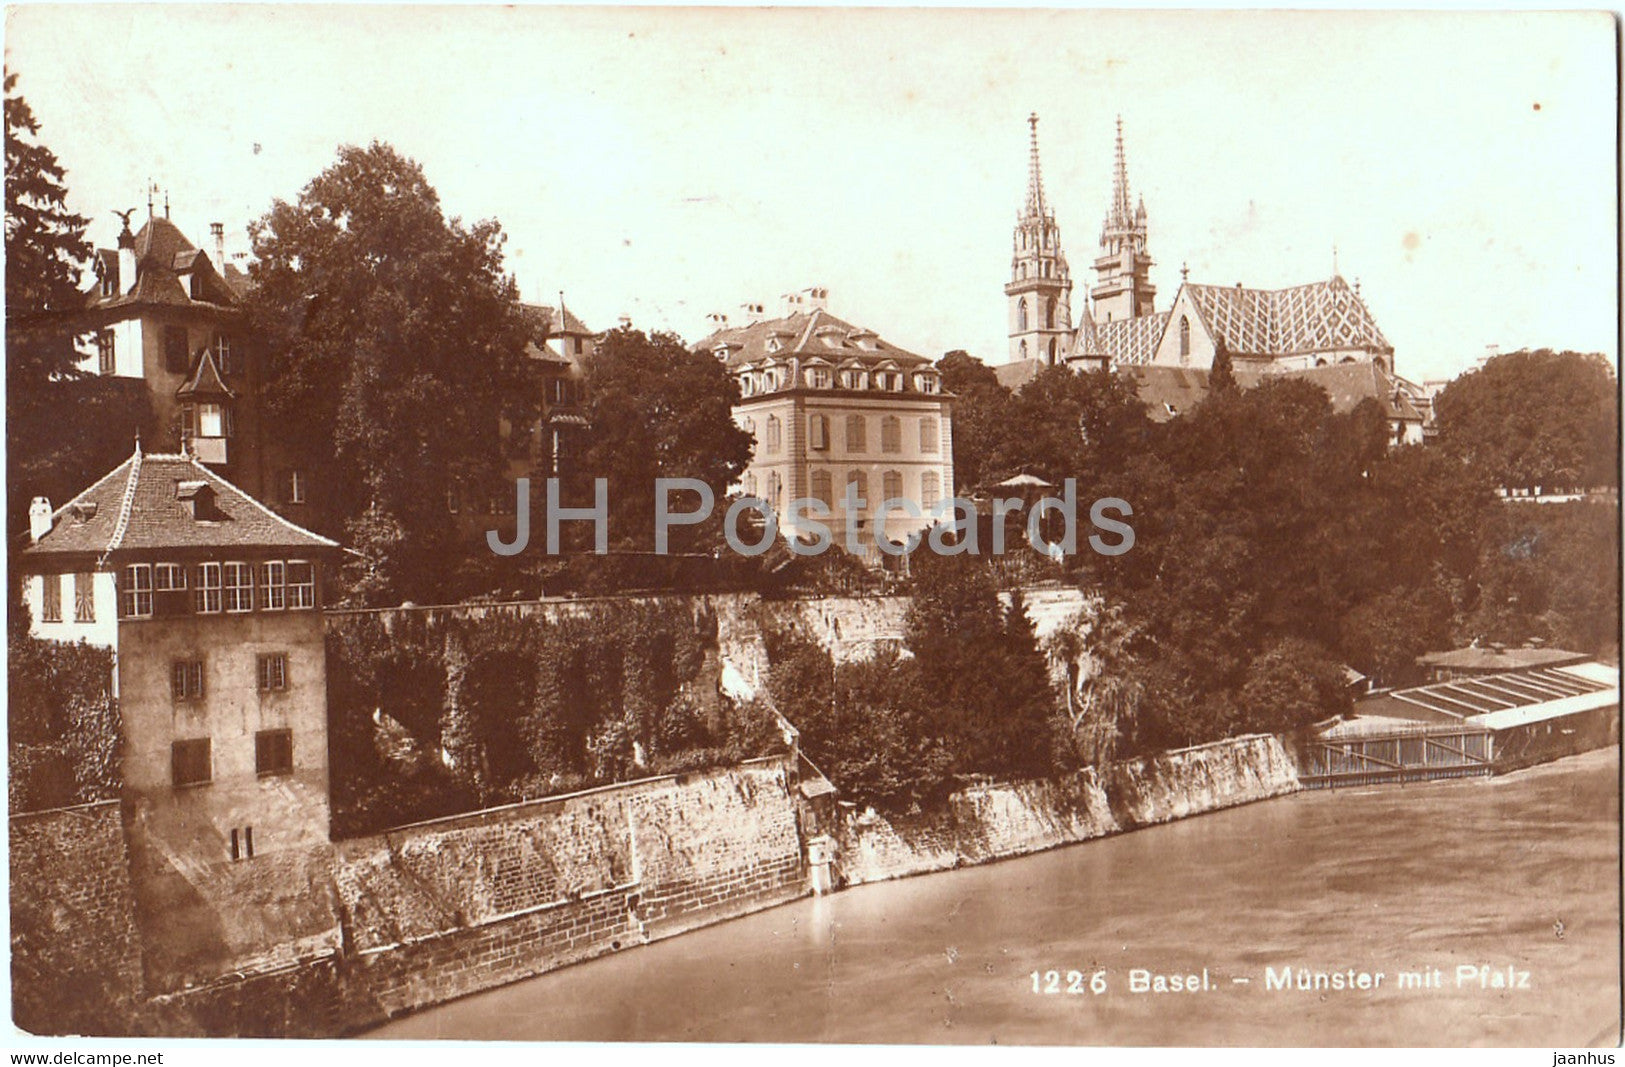 Basel - Basle - Munster mit Pfalz - 1226 - old postcard - 1929 - Switzerland - used - JH Postcards